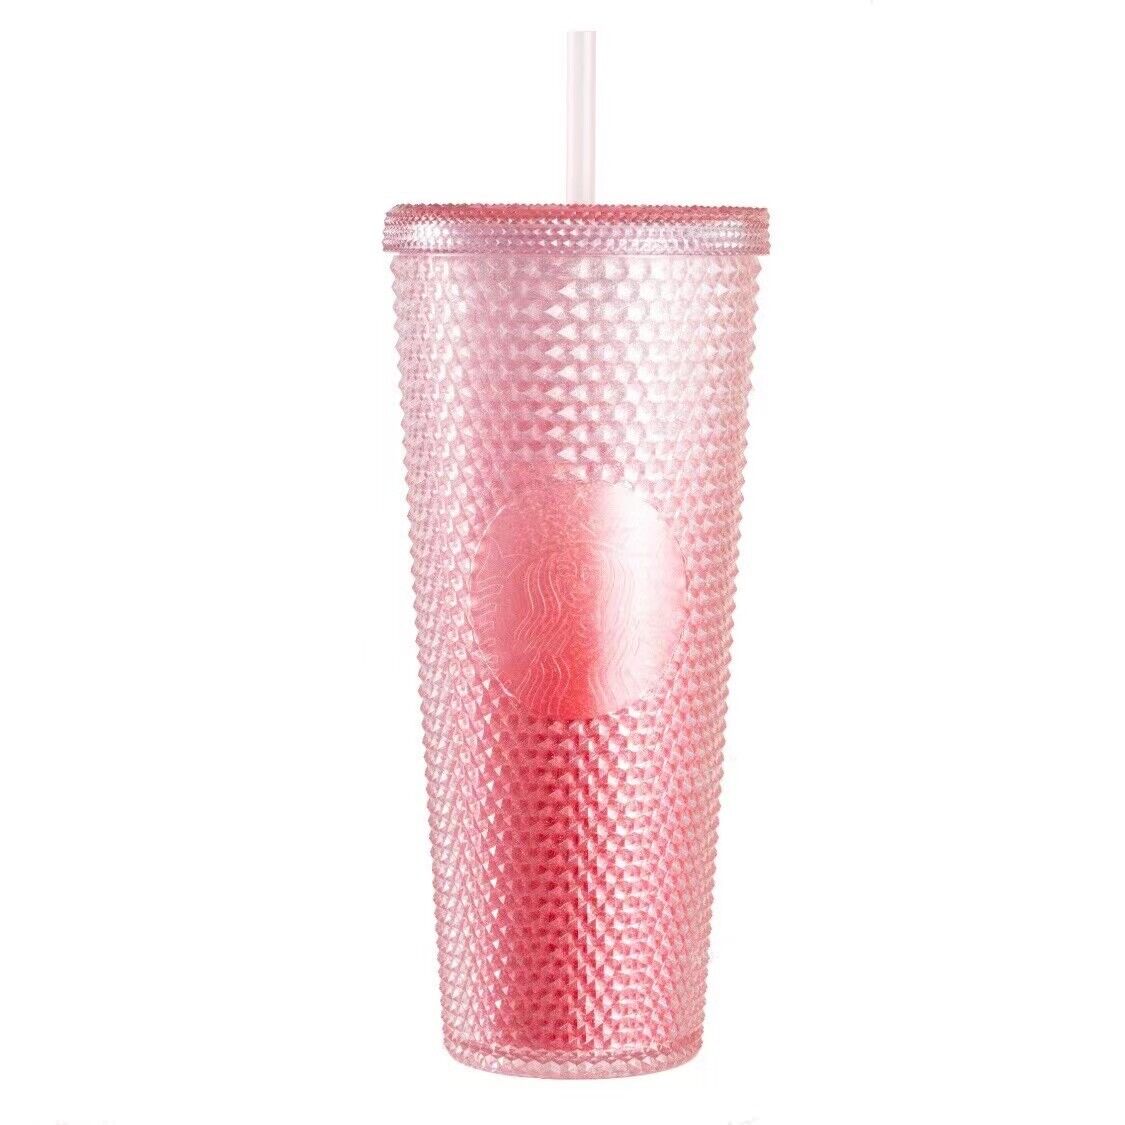 2021 China Starbucks Summer Tumbler Straw Cup 24oz Gradient Pink Plastic New